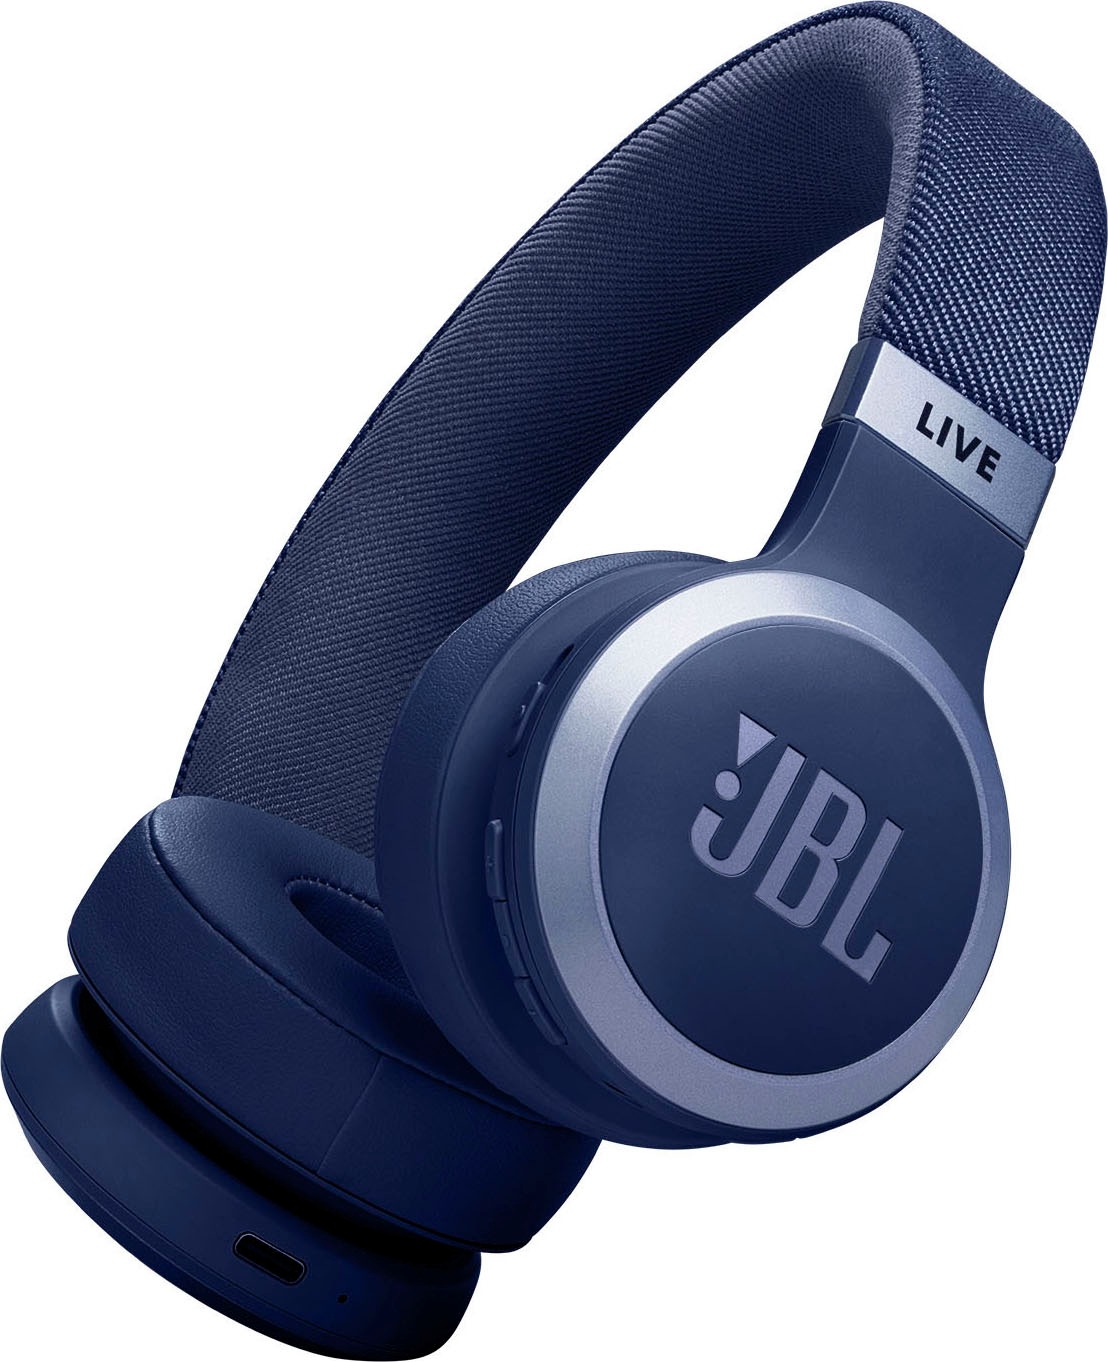 Shop Kopfhörer JBL OTTO jetzt »LIVE Online im 670NC«